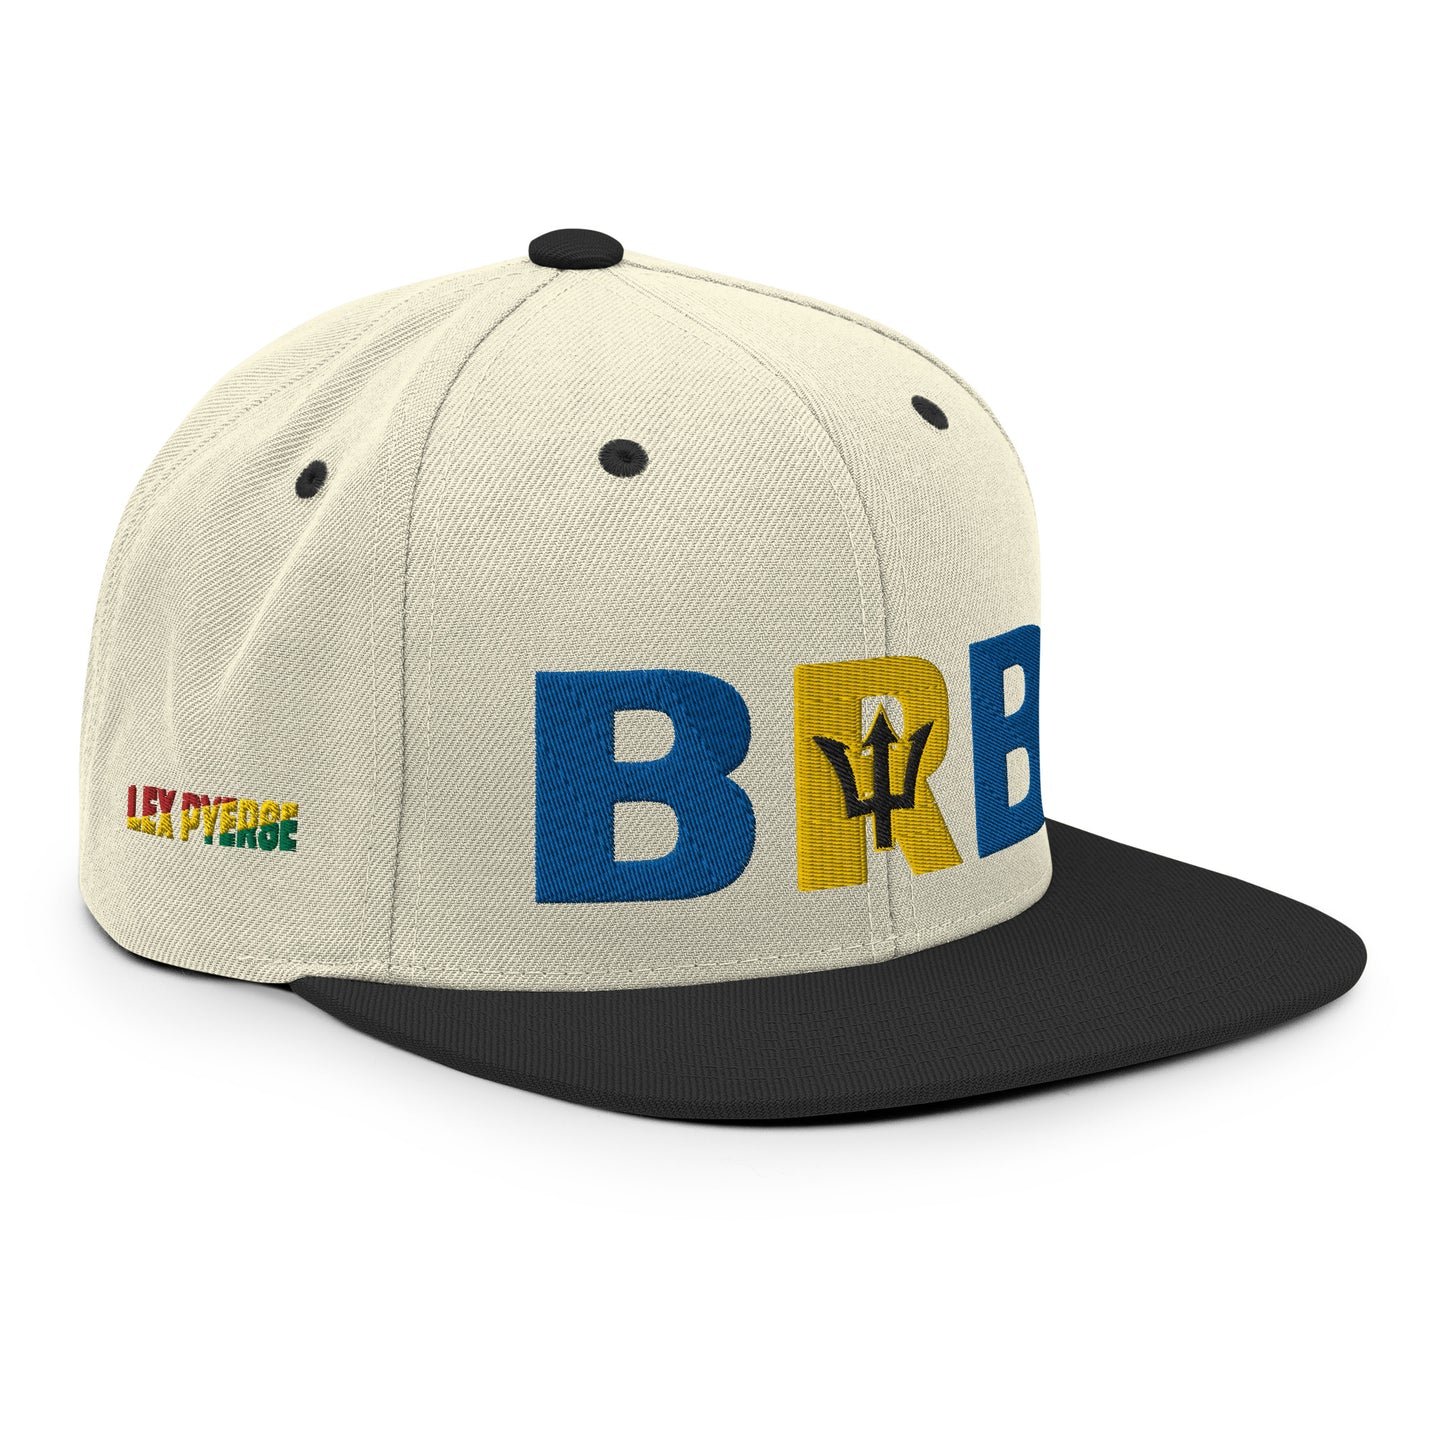 BARBADOS National Flag Inspired Snapback Hat